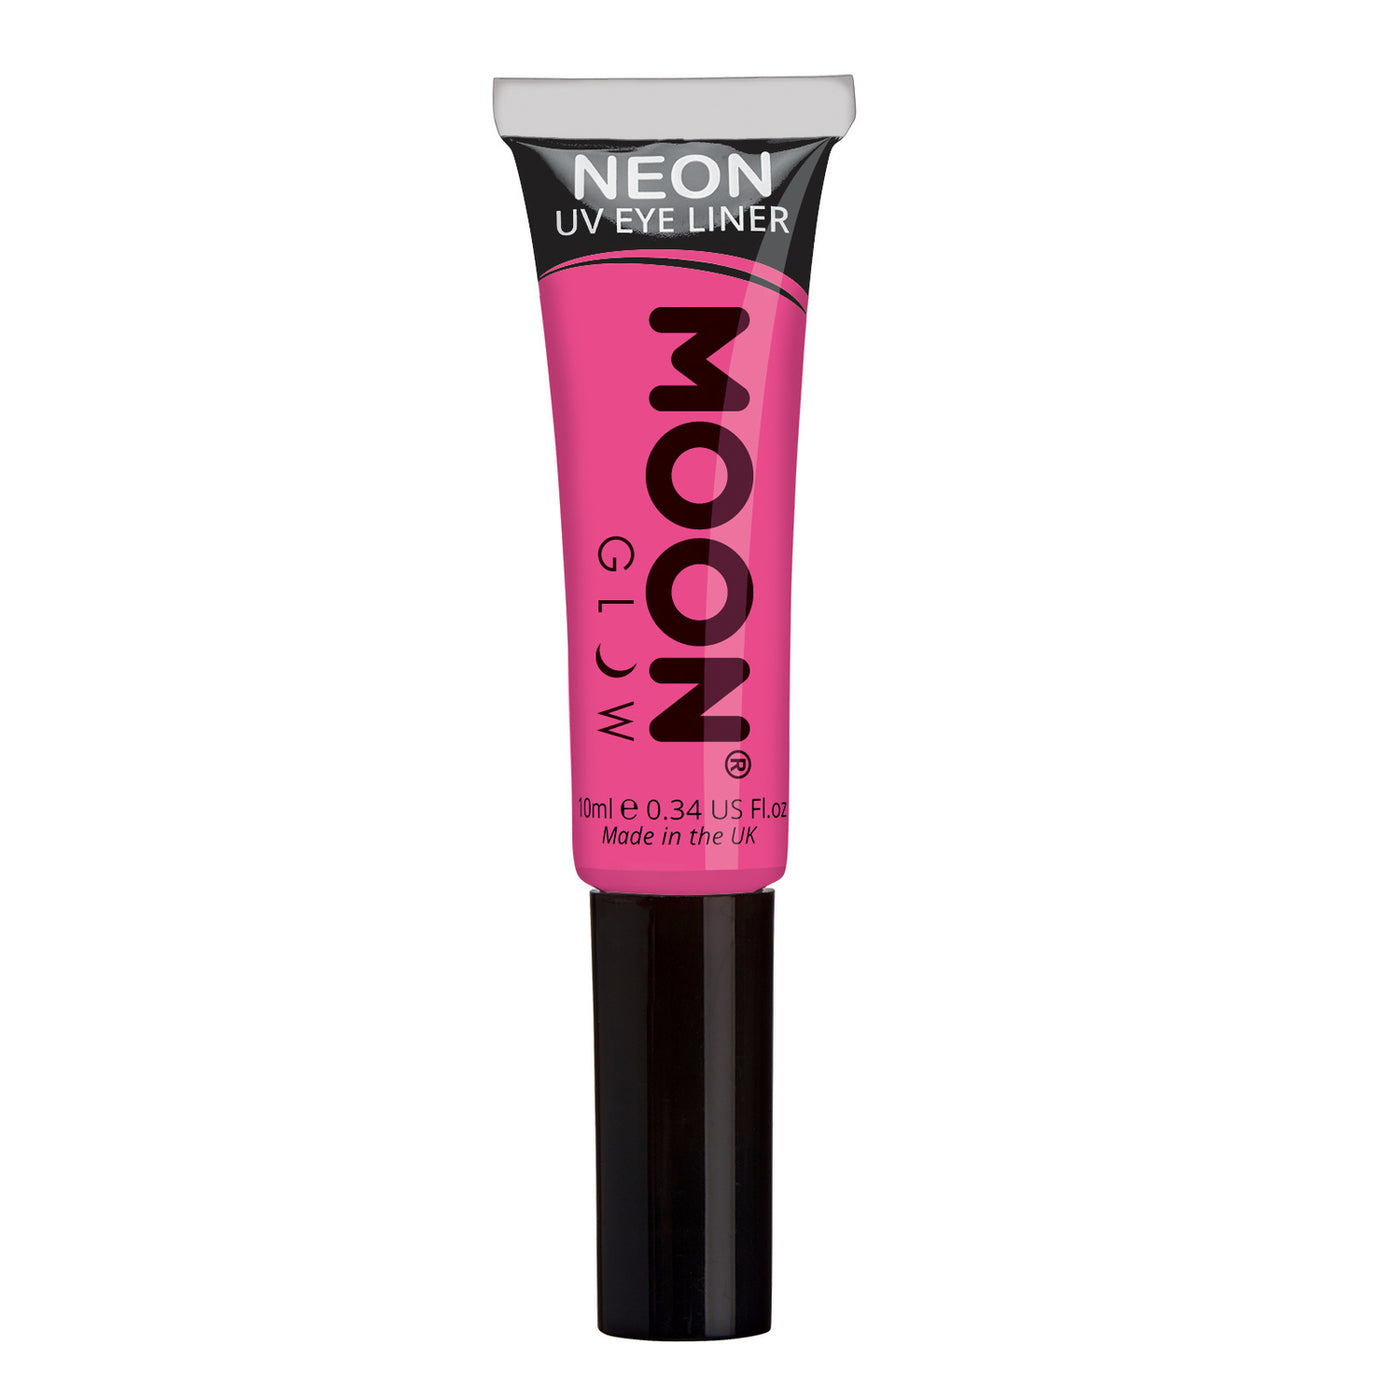 Moon Glow Neon UV Eye Liner - Intense Pink